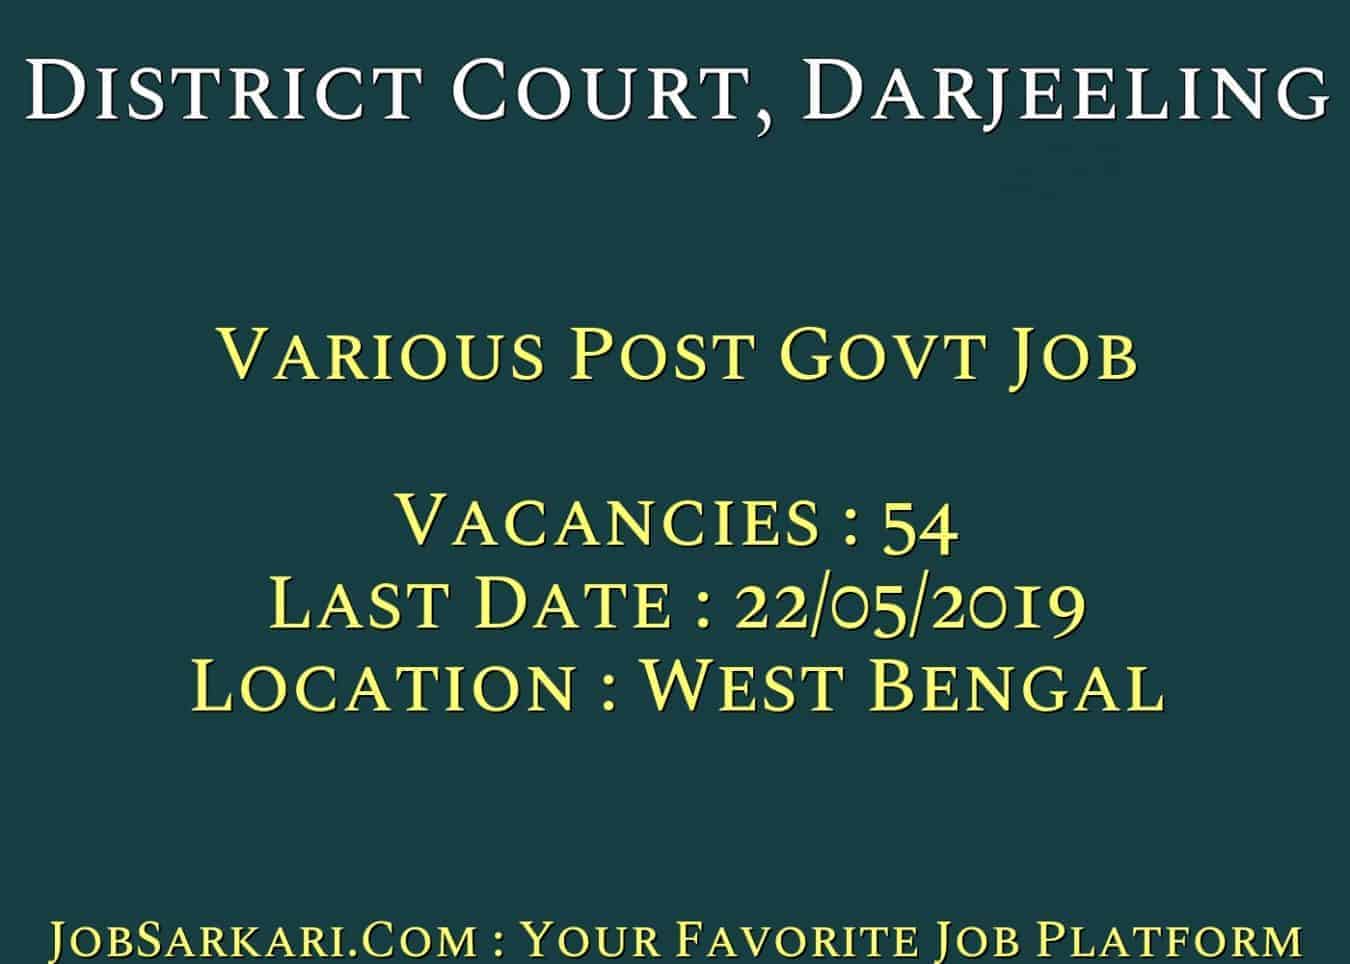 District Court, Darjeeling Recruitment 2019 For Various Post Govt Job